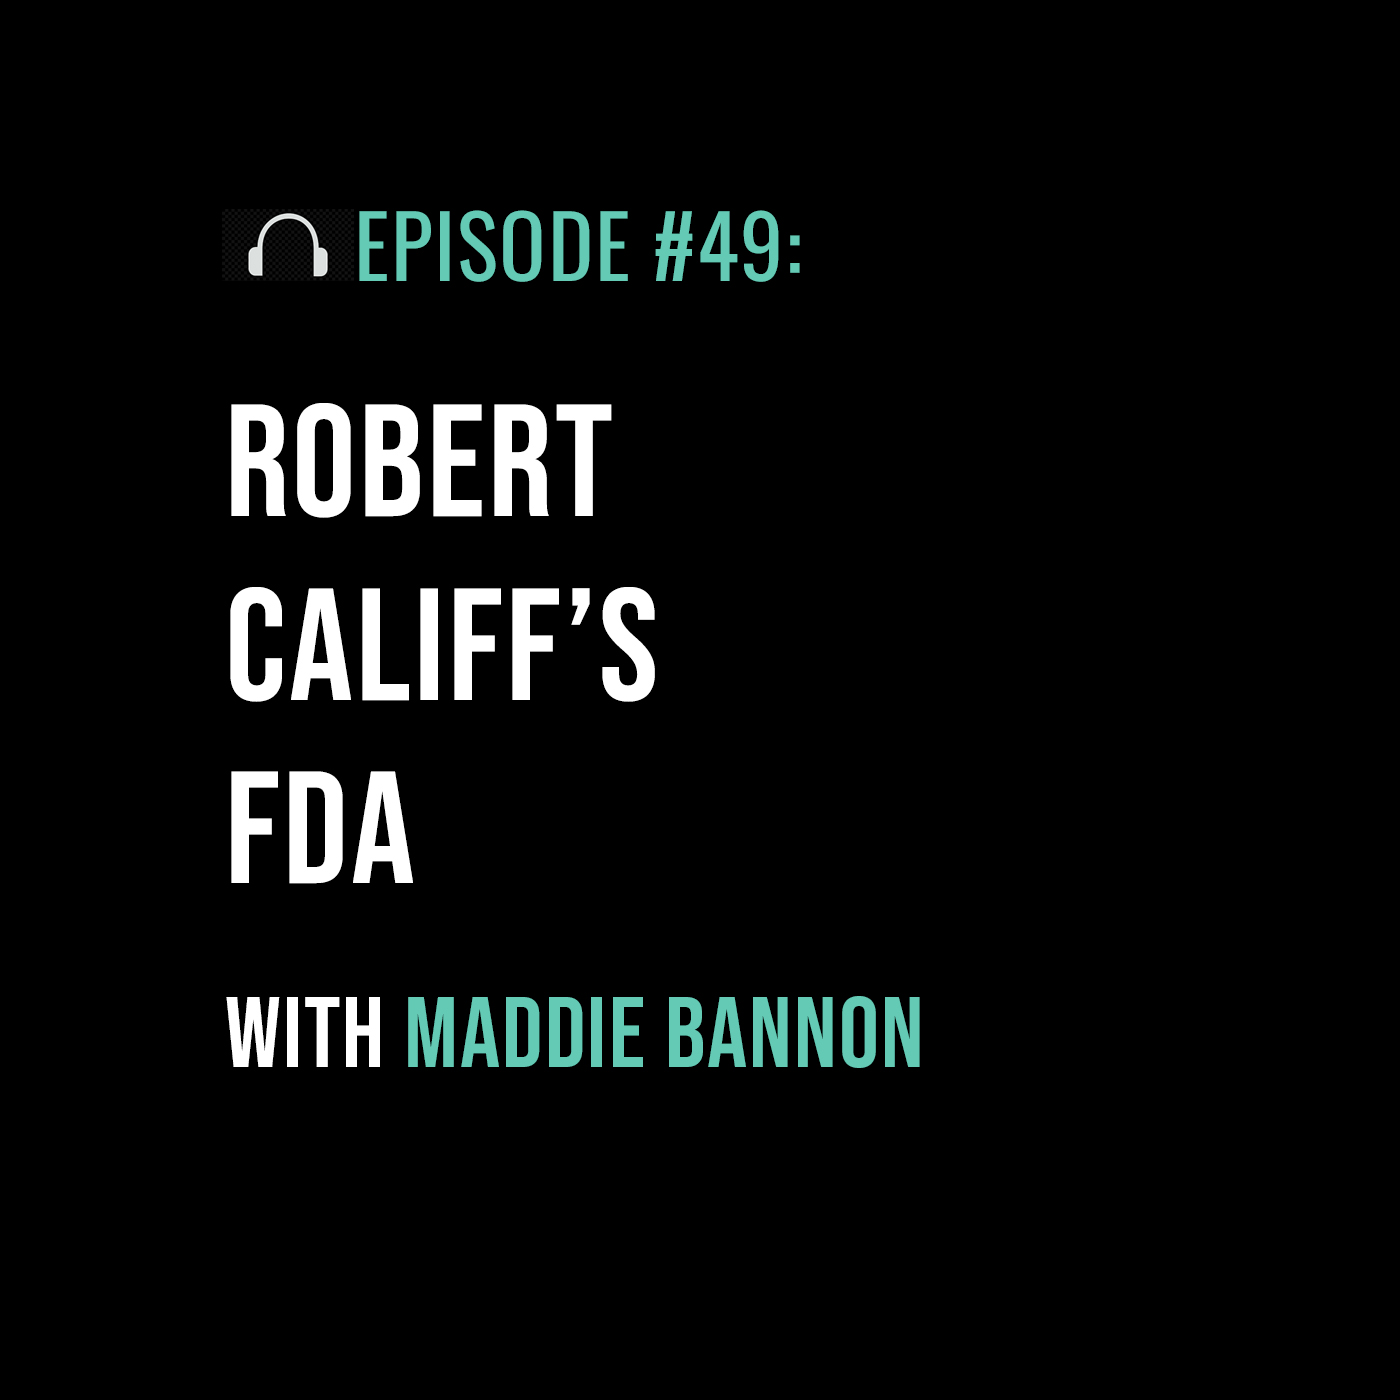 Robert Califf’s FDA with Maddie Bannon